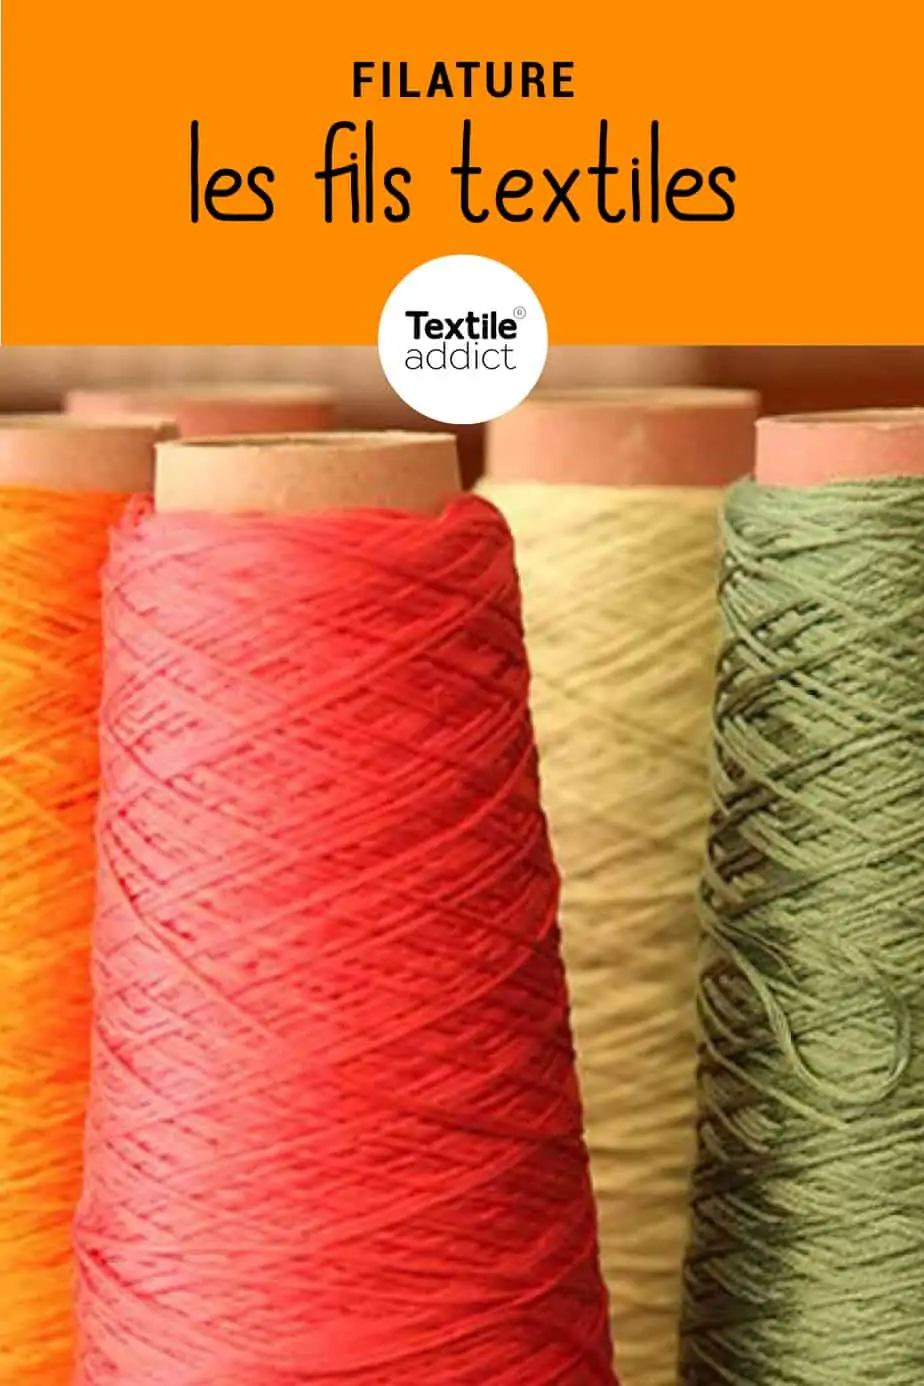 Les fils textiles - Textile Addict